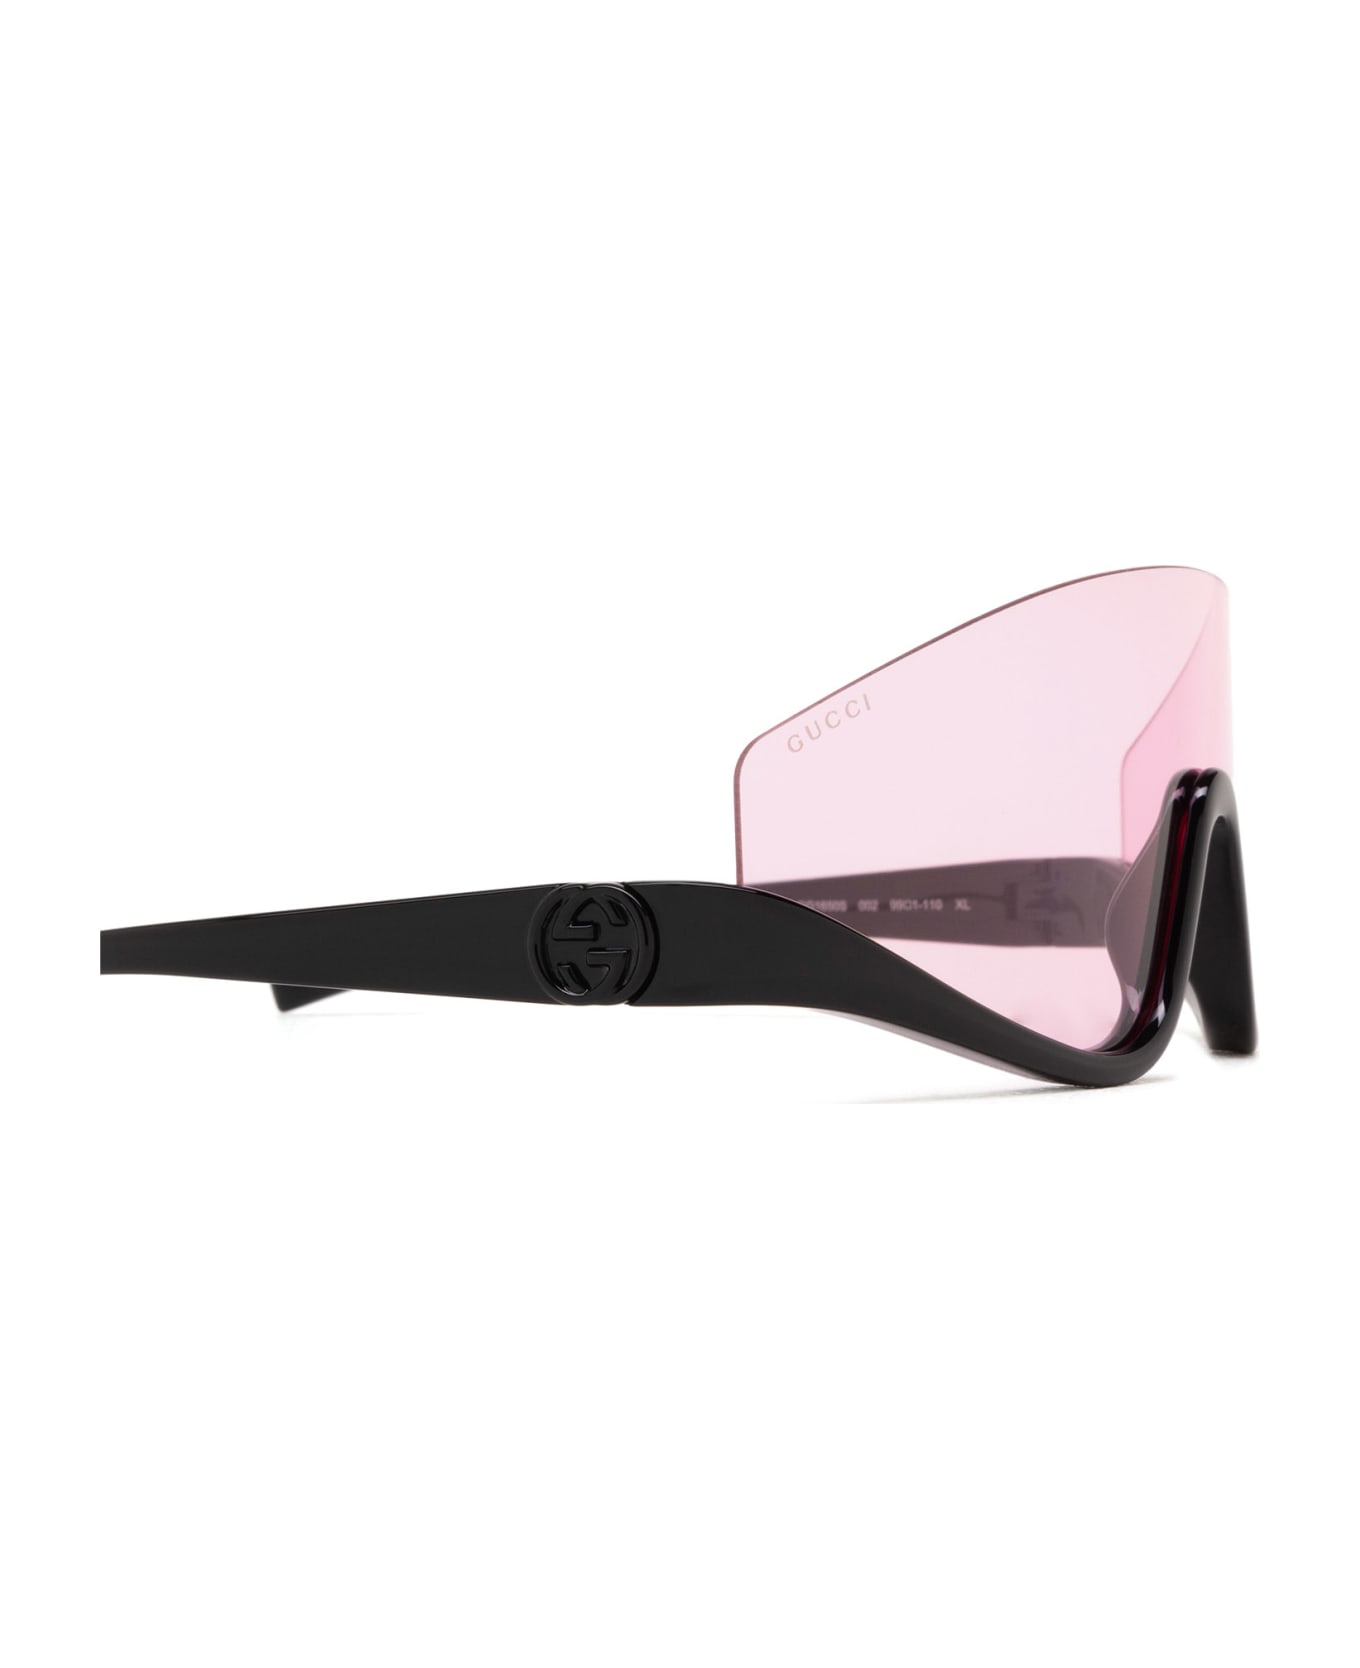 Gucci Eyewear Gg1650s Black Sunglasses - Black サングラス